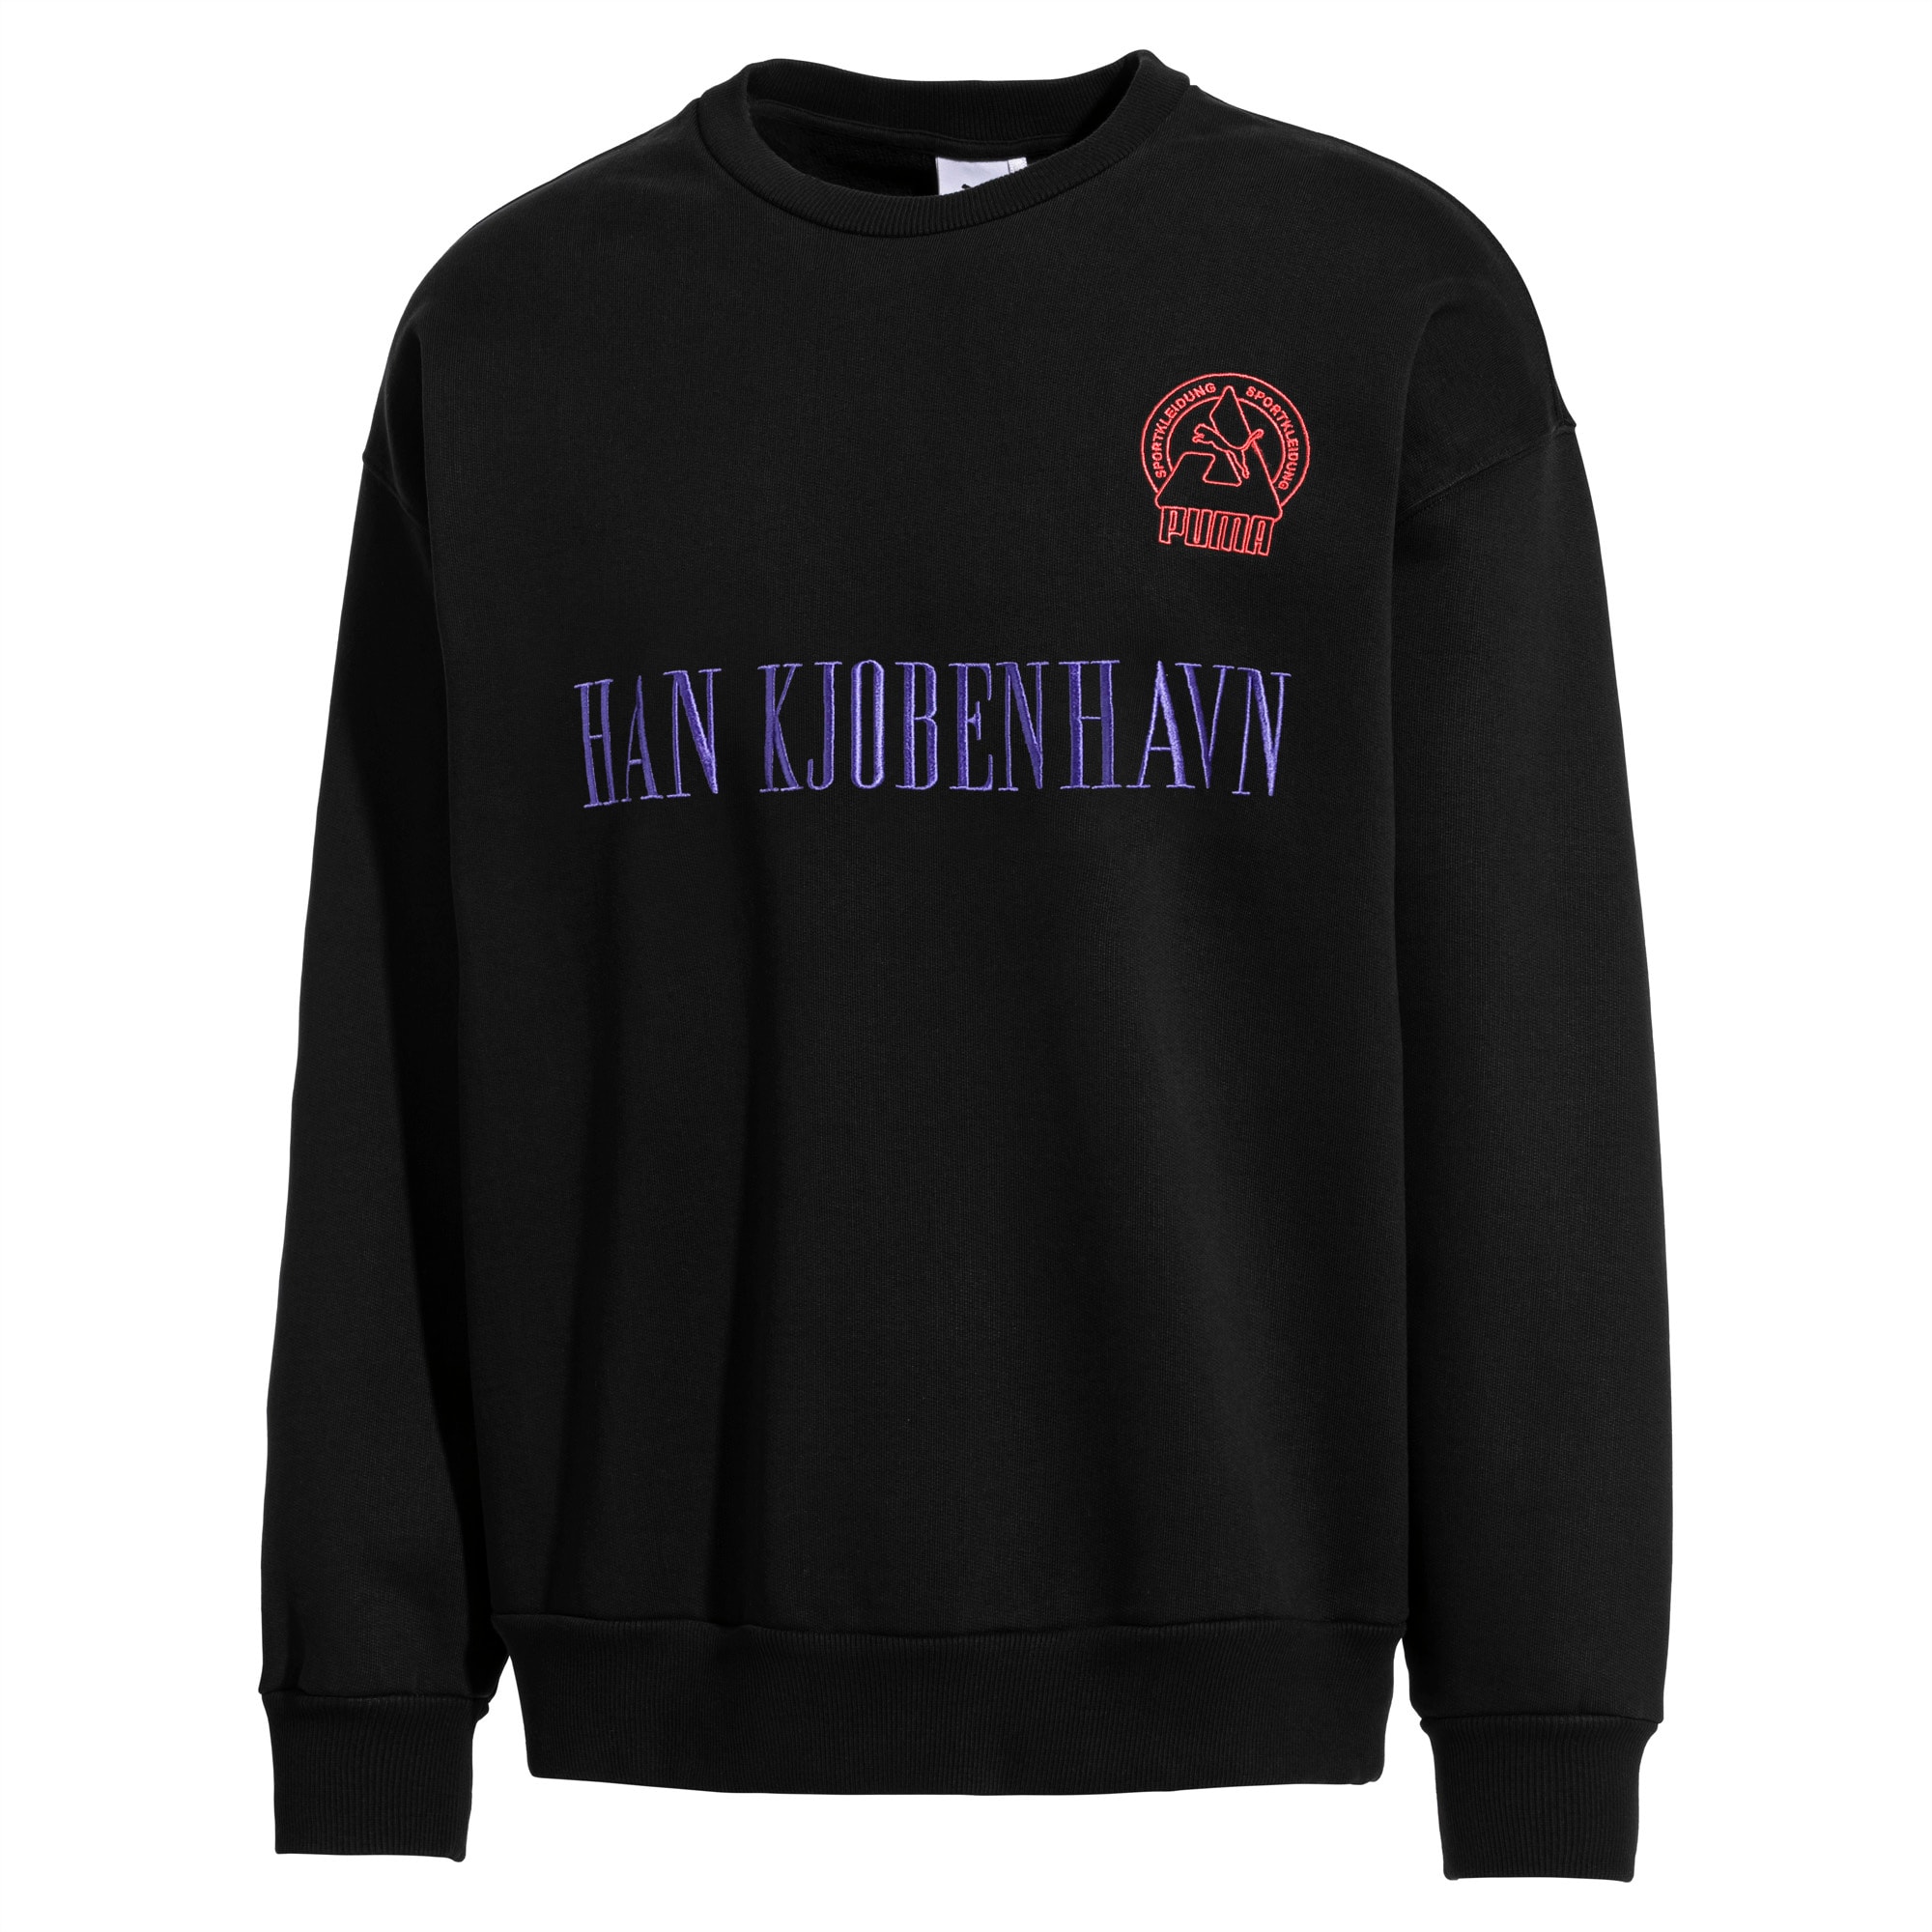 PUMA x HAN KJØBENHAVN Men's Sweater 